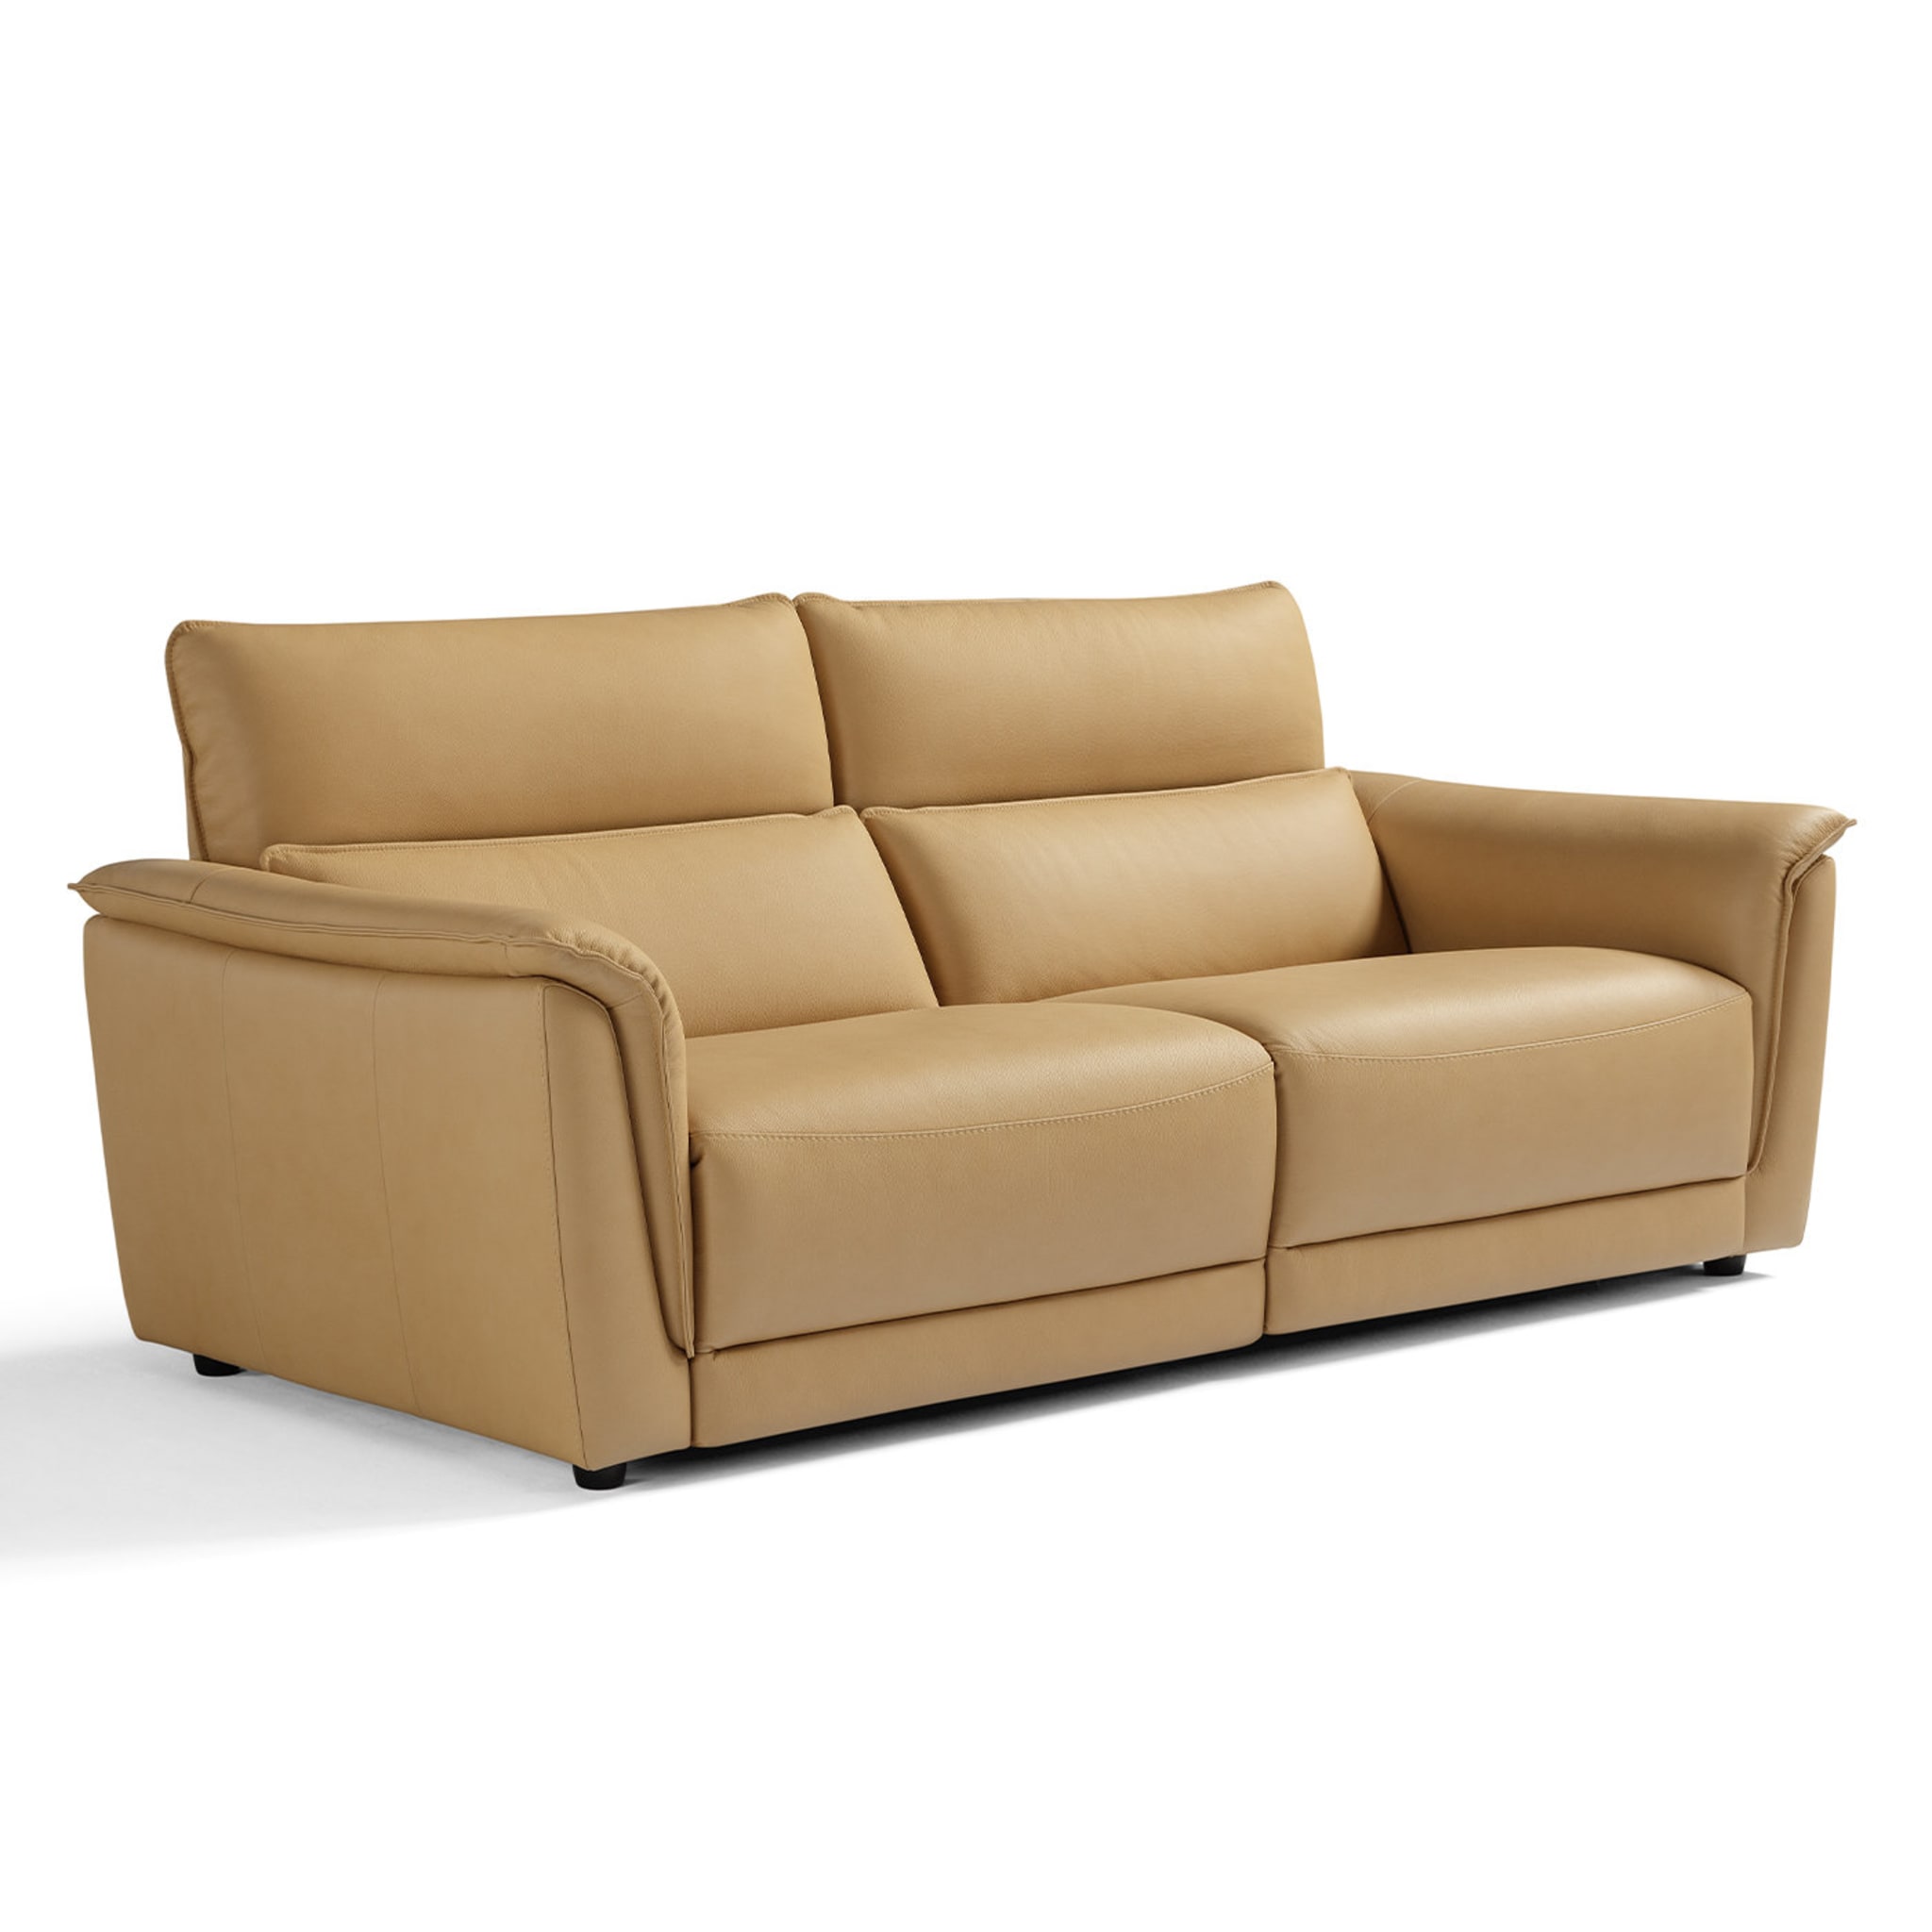 Bovino Sand Leather 2-Seater Armchair - Alternative view 5